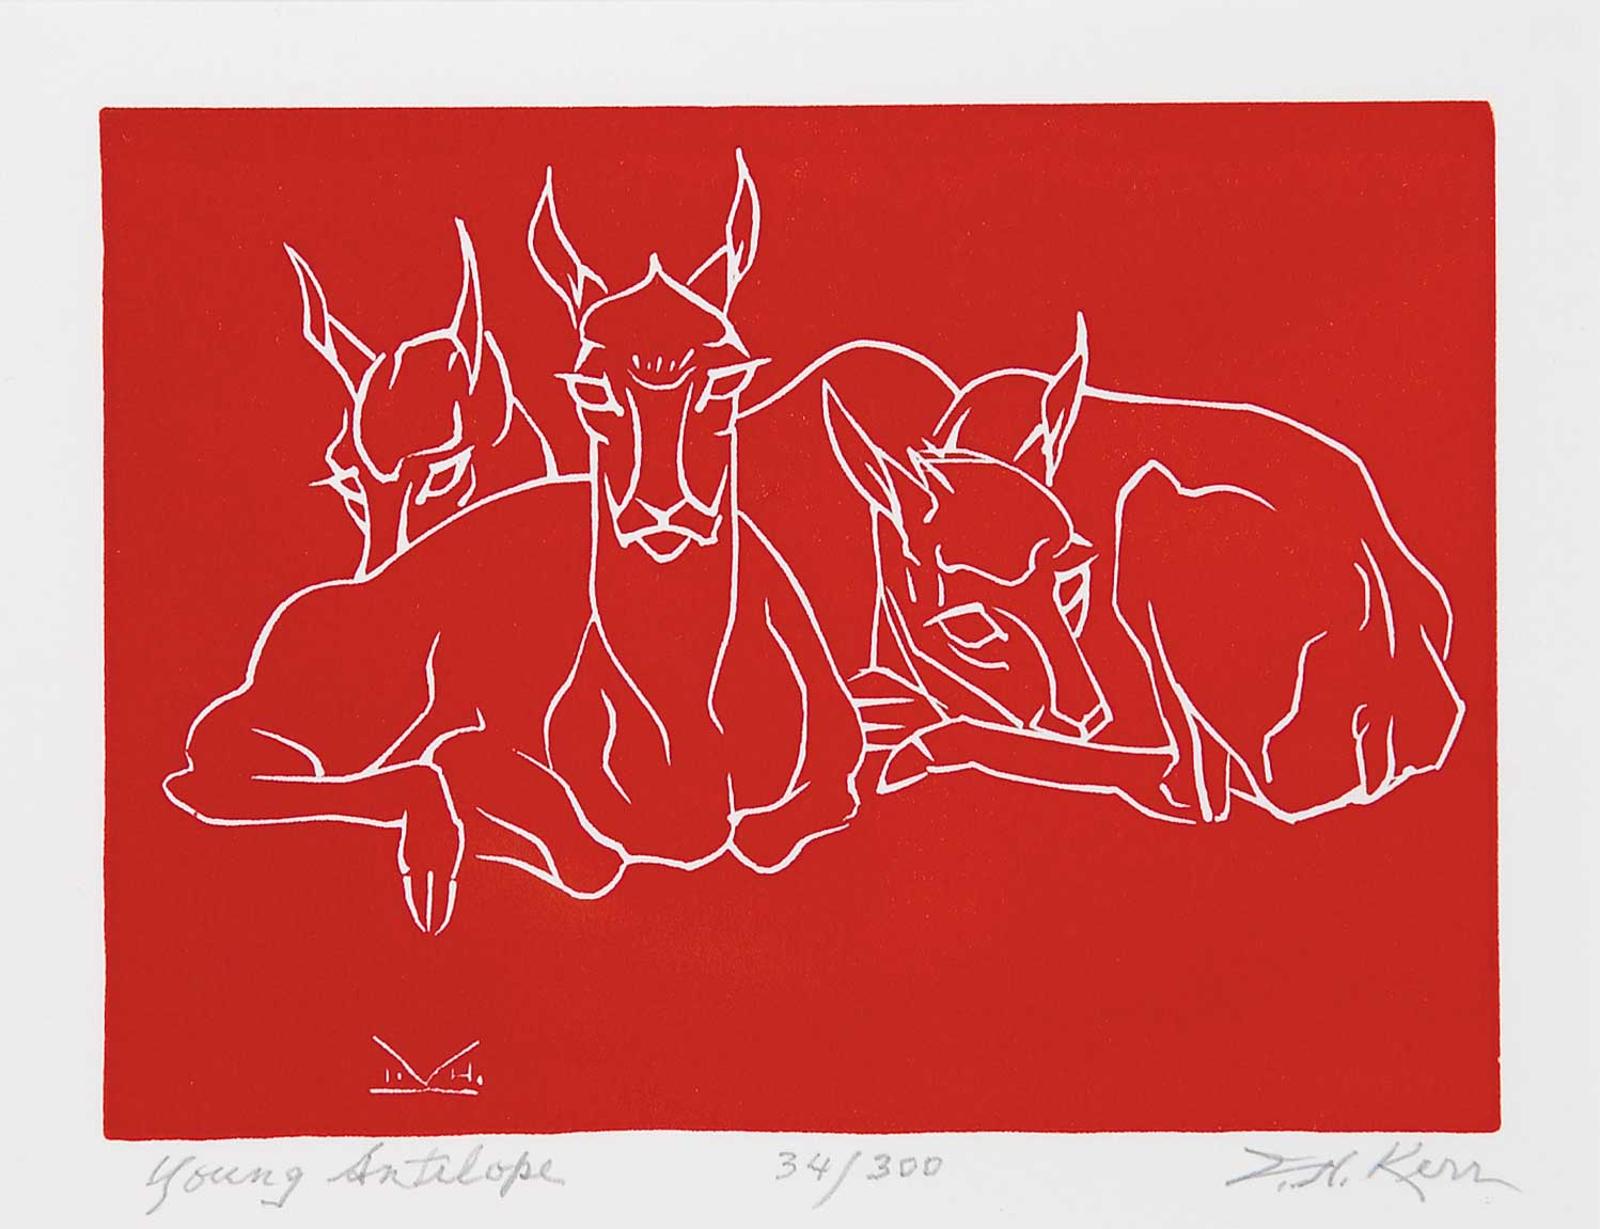 Illingworth Holey (Buck) Kerr (1905-1989) - Young Antelope  #34/300